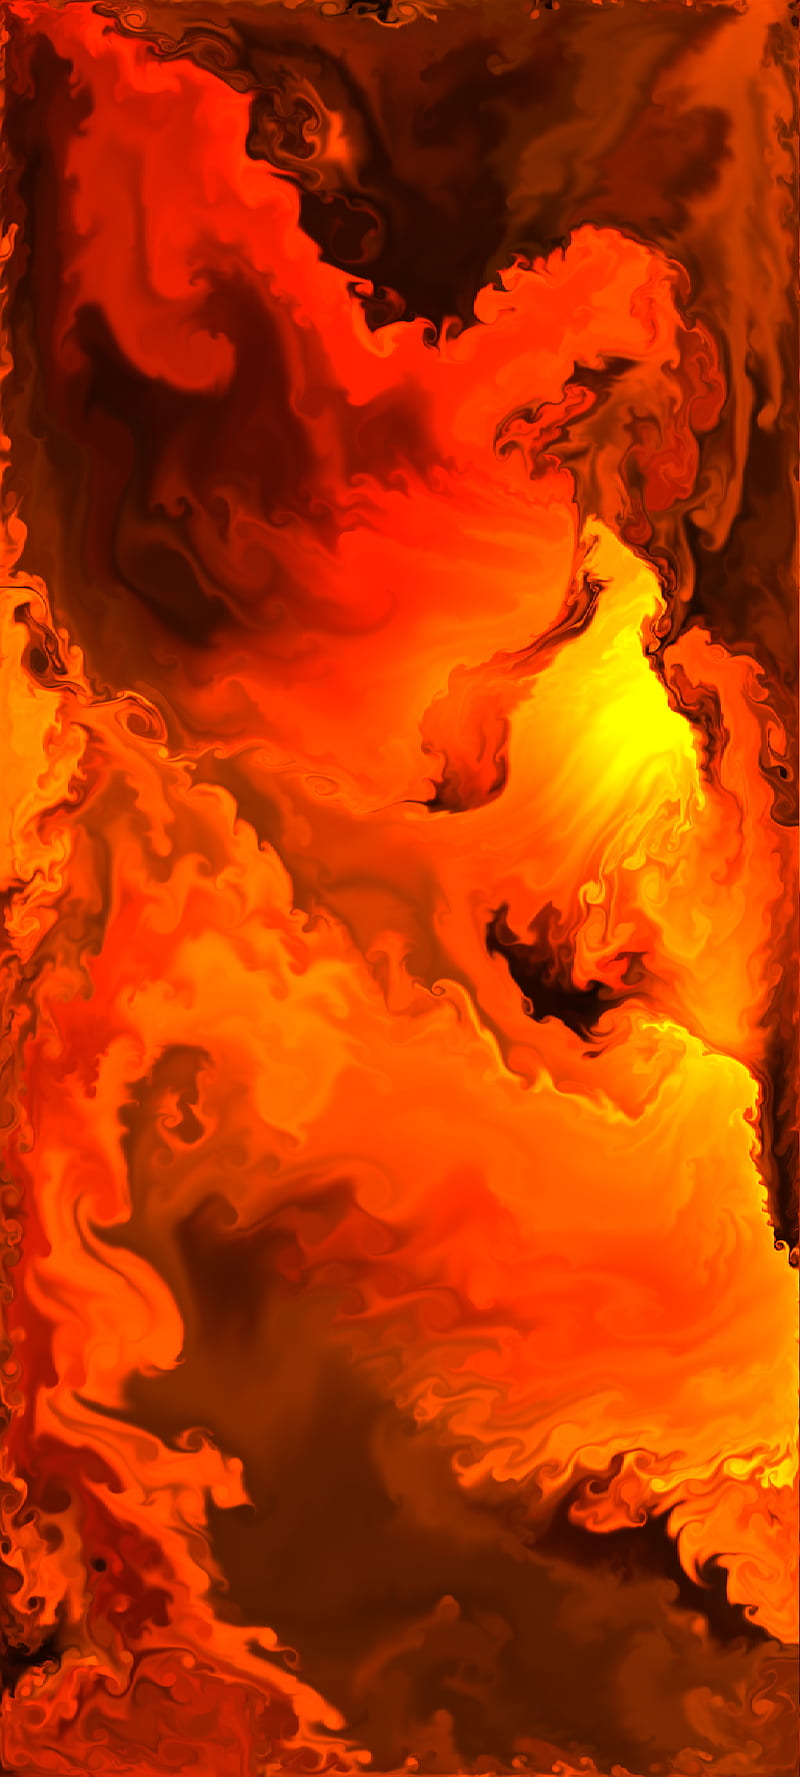 Fire fluid 05, art, burn, gas, orange, red, simulation, volcano, yellow ...